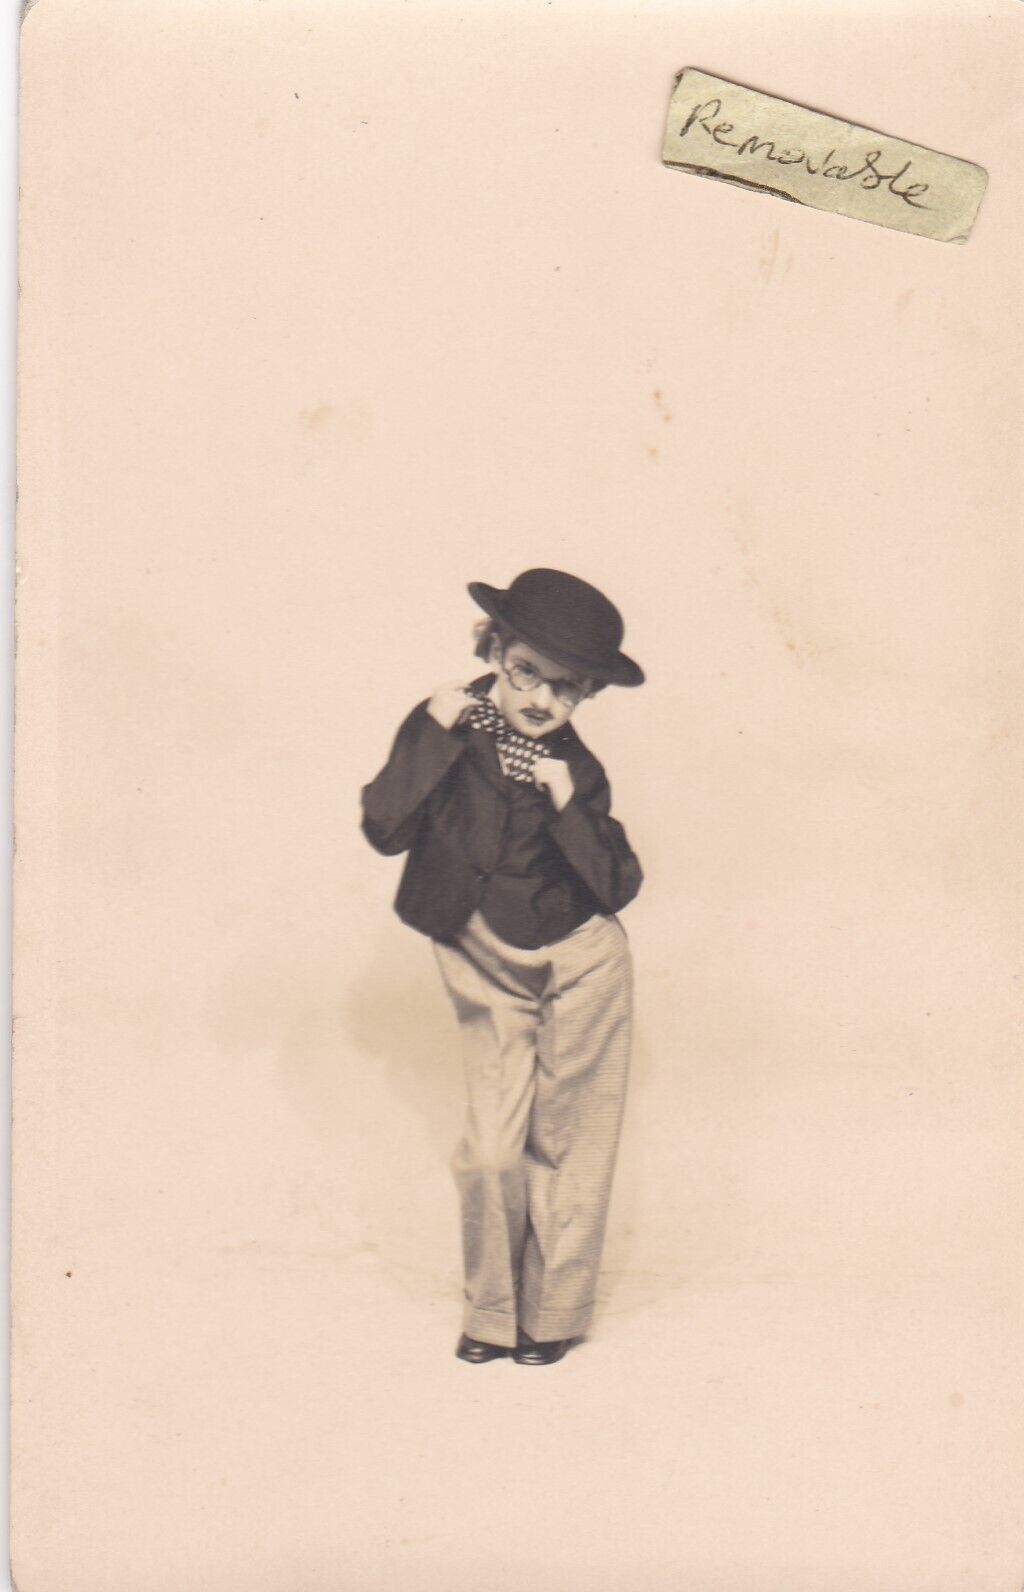 UNUSUAL OLD PHOTO CHILDREN FANCY DRESS COSTUME KETTERING SOCIAL HISTORY PR 858